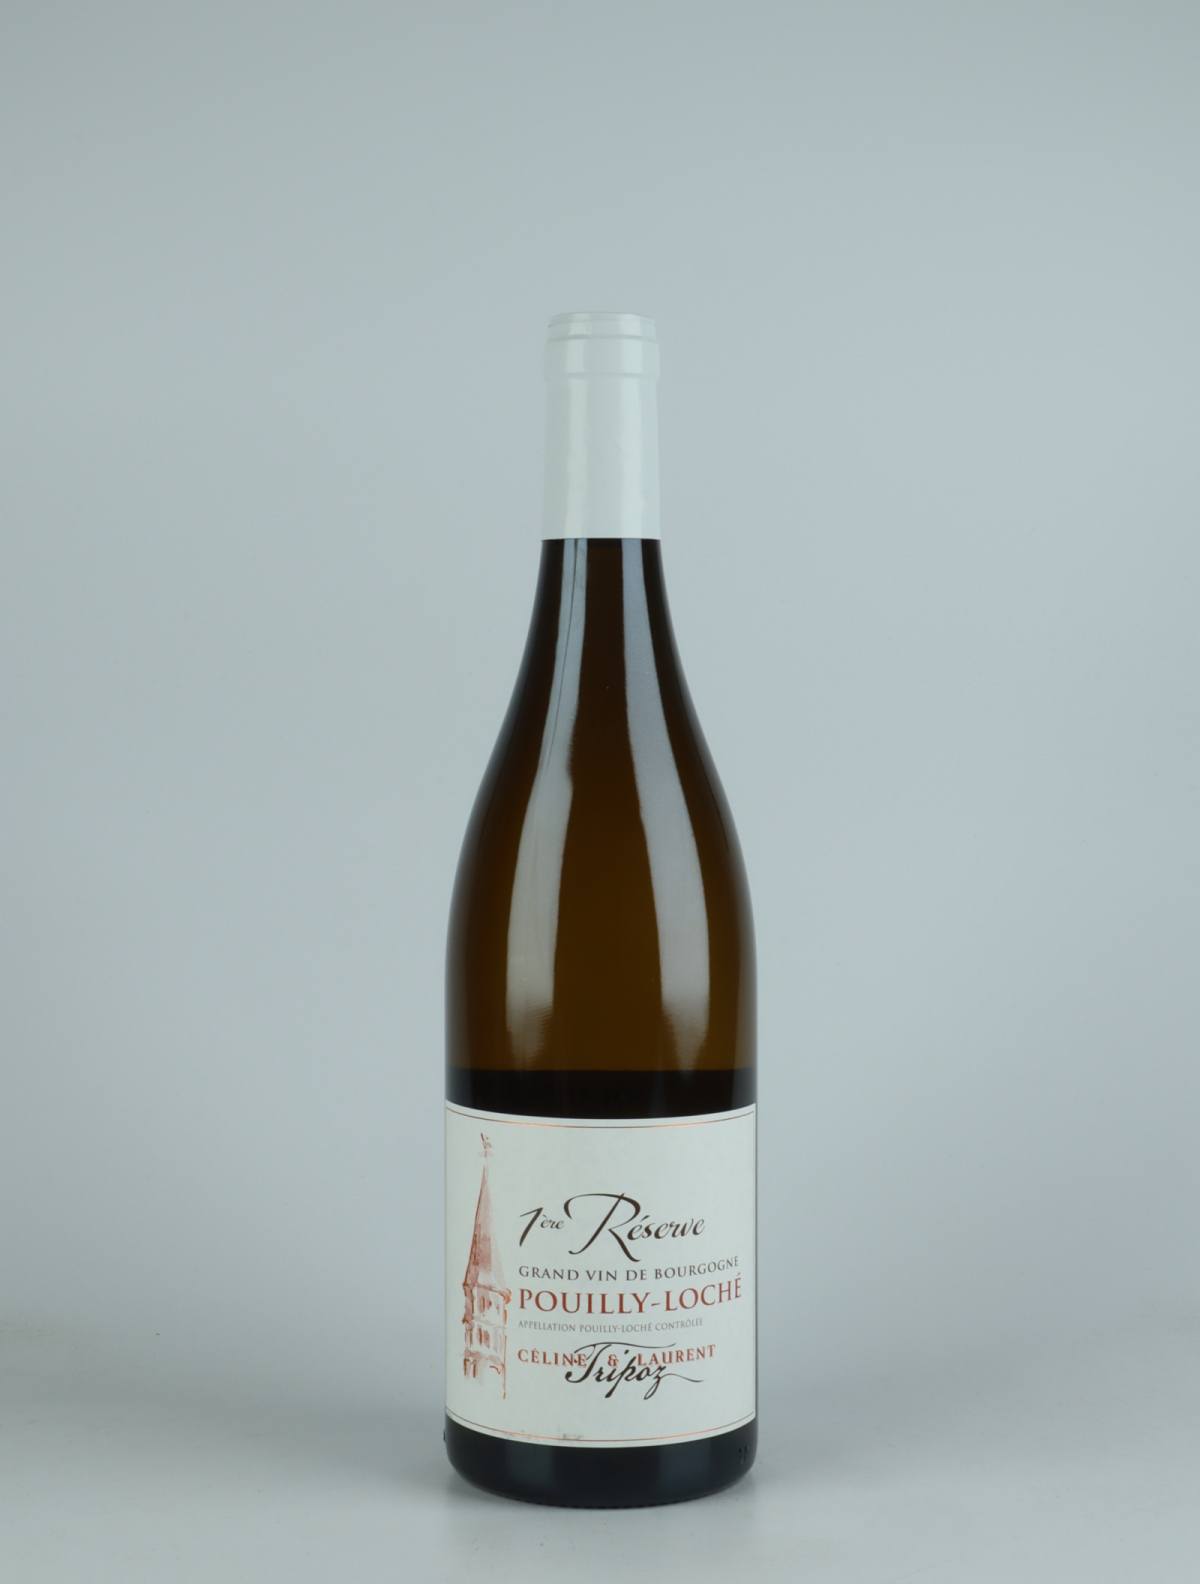 En flaske 2020 Pouilly-Loché - 1ère Réserve Hvidvin fra Céline & Laurent Tripoz, Bourgogne i Frankrig